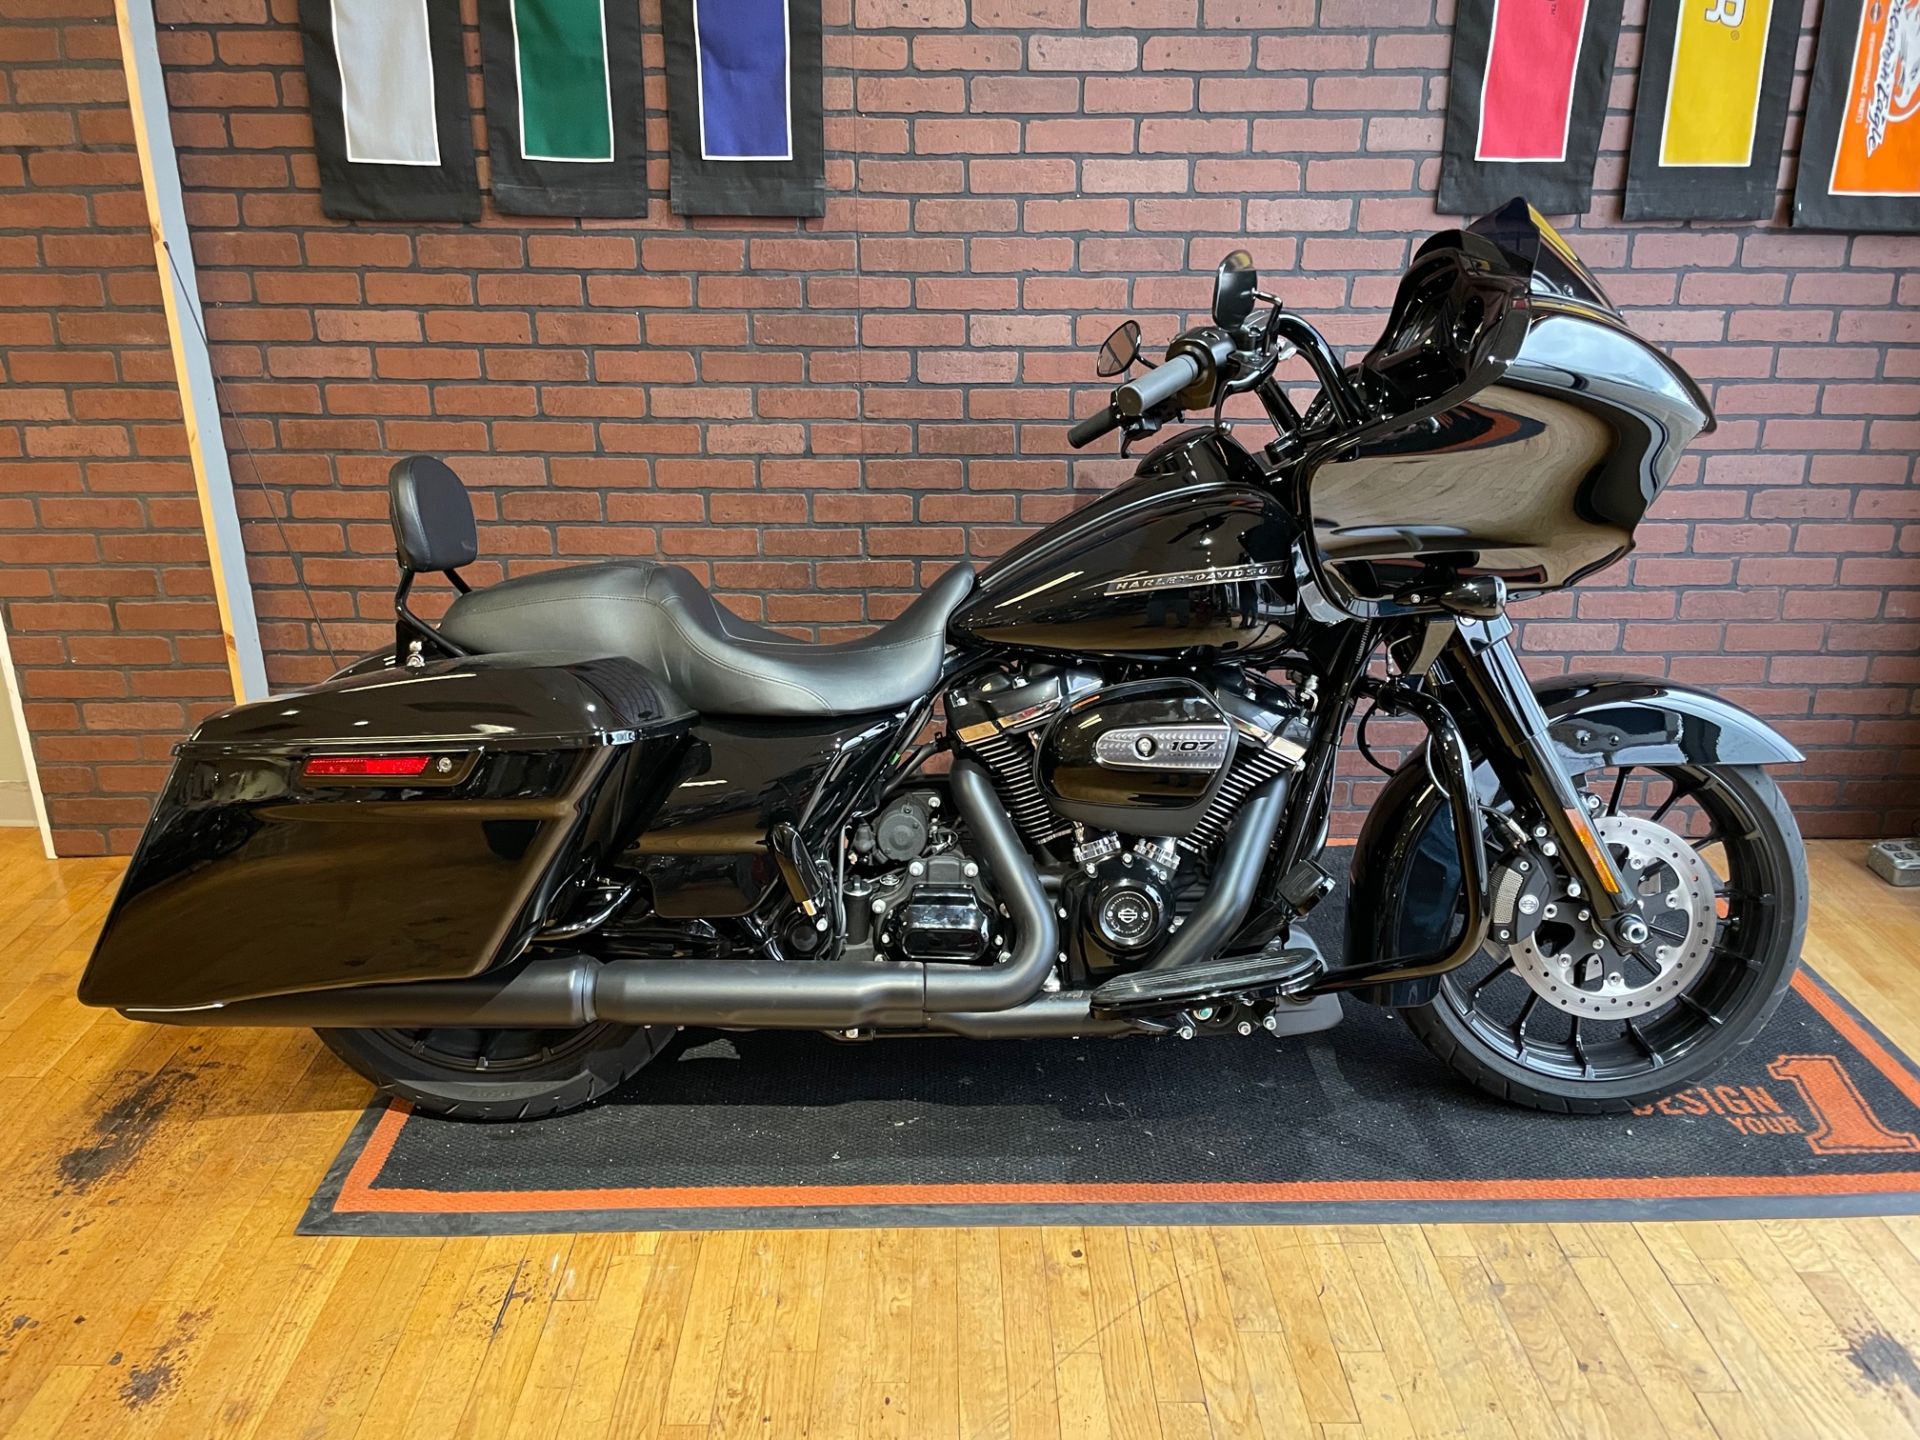 Used 2018 Harley Davidson Road Glide Special Motorcycles In South Charleston Wv 666631 Vivid Black